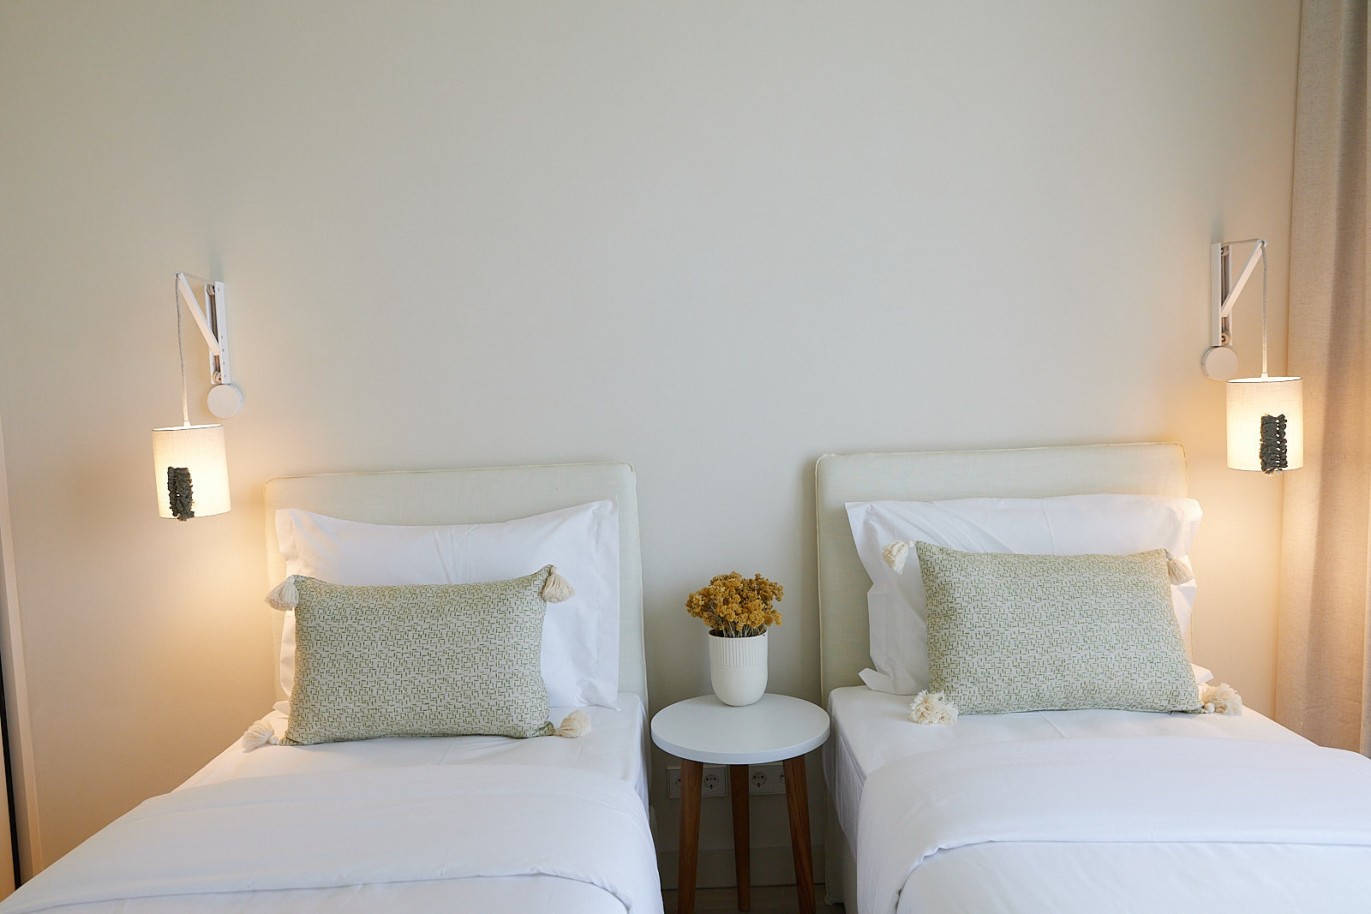 2 bedroom apartment in resort, for sale in Porches, Algarve_228804